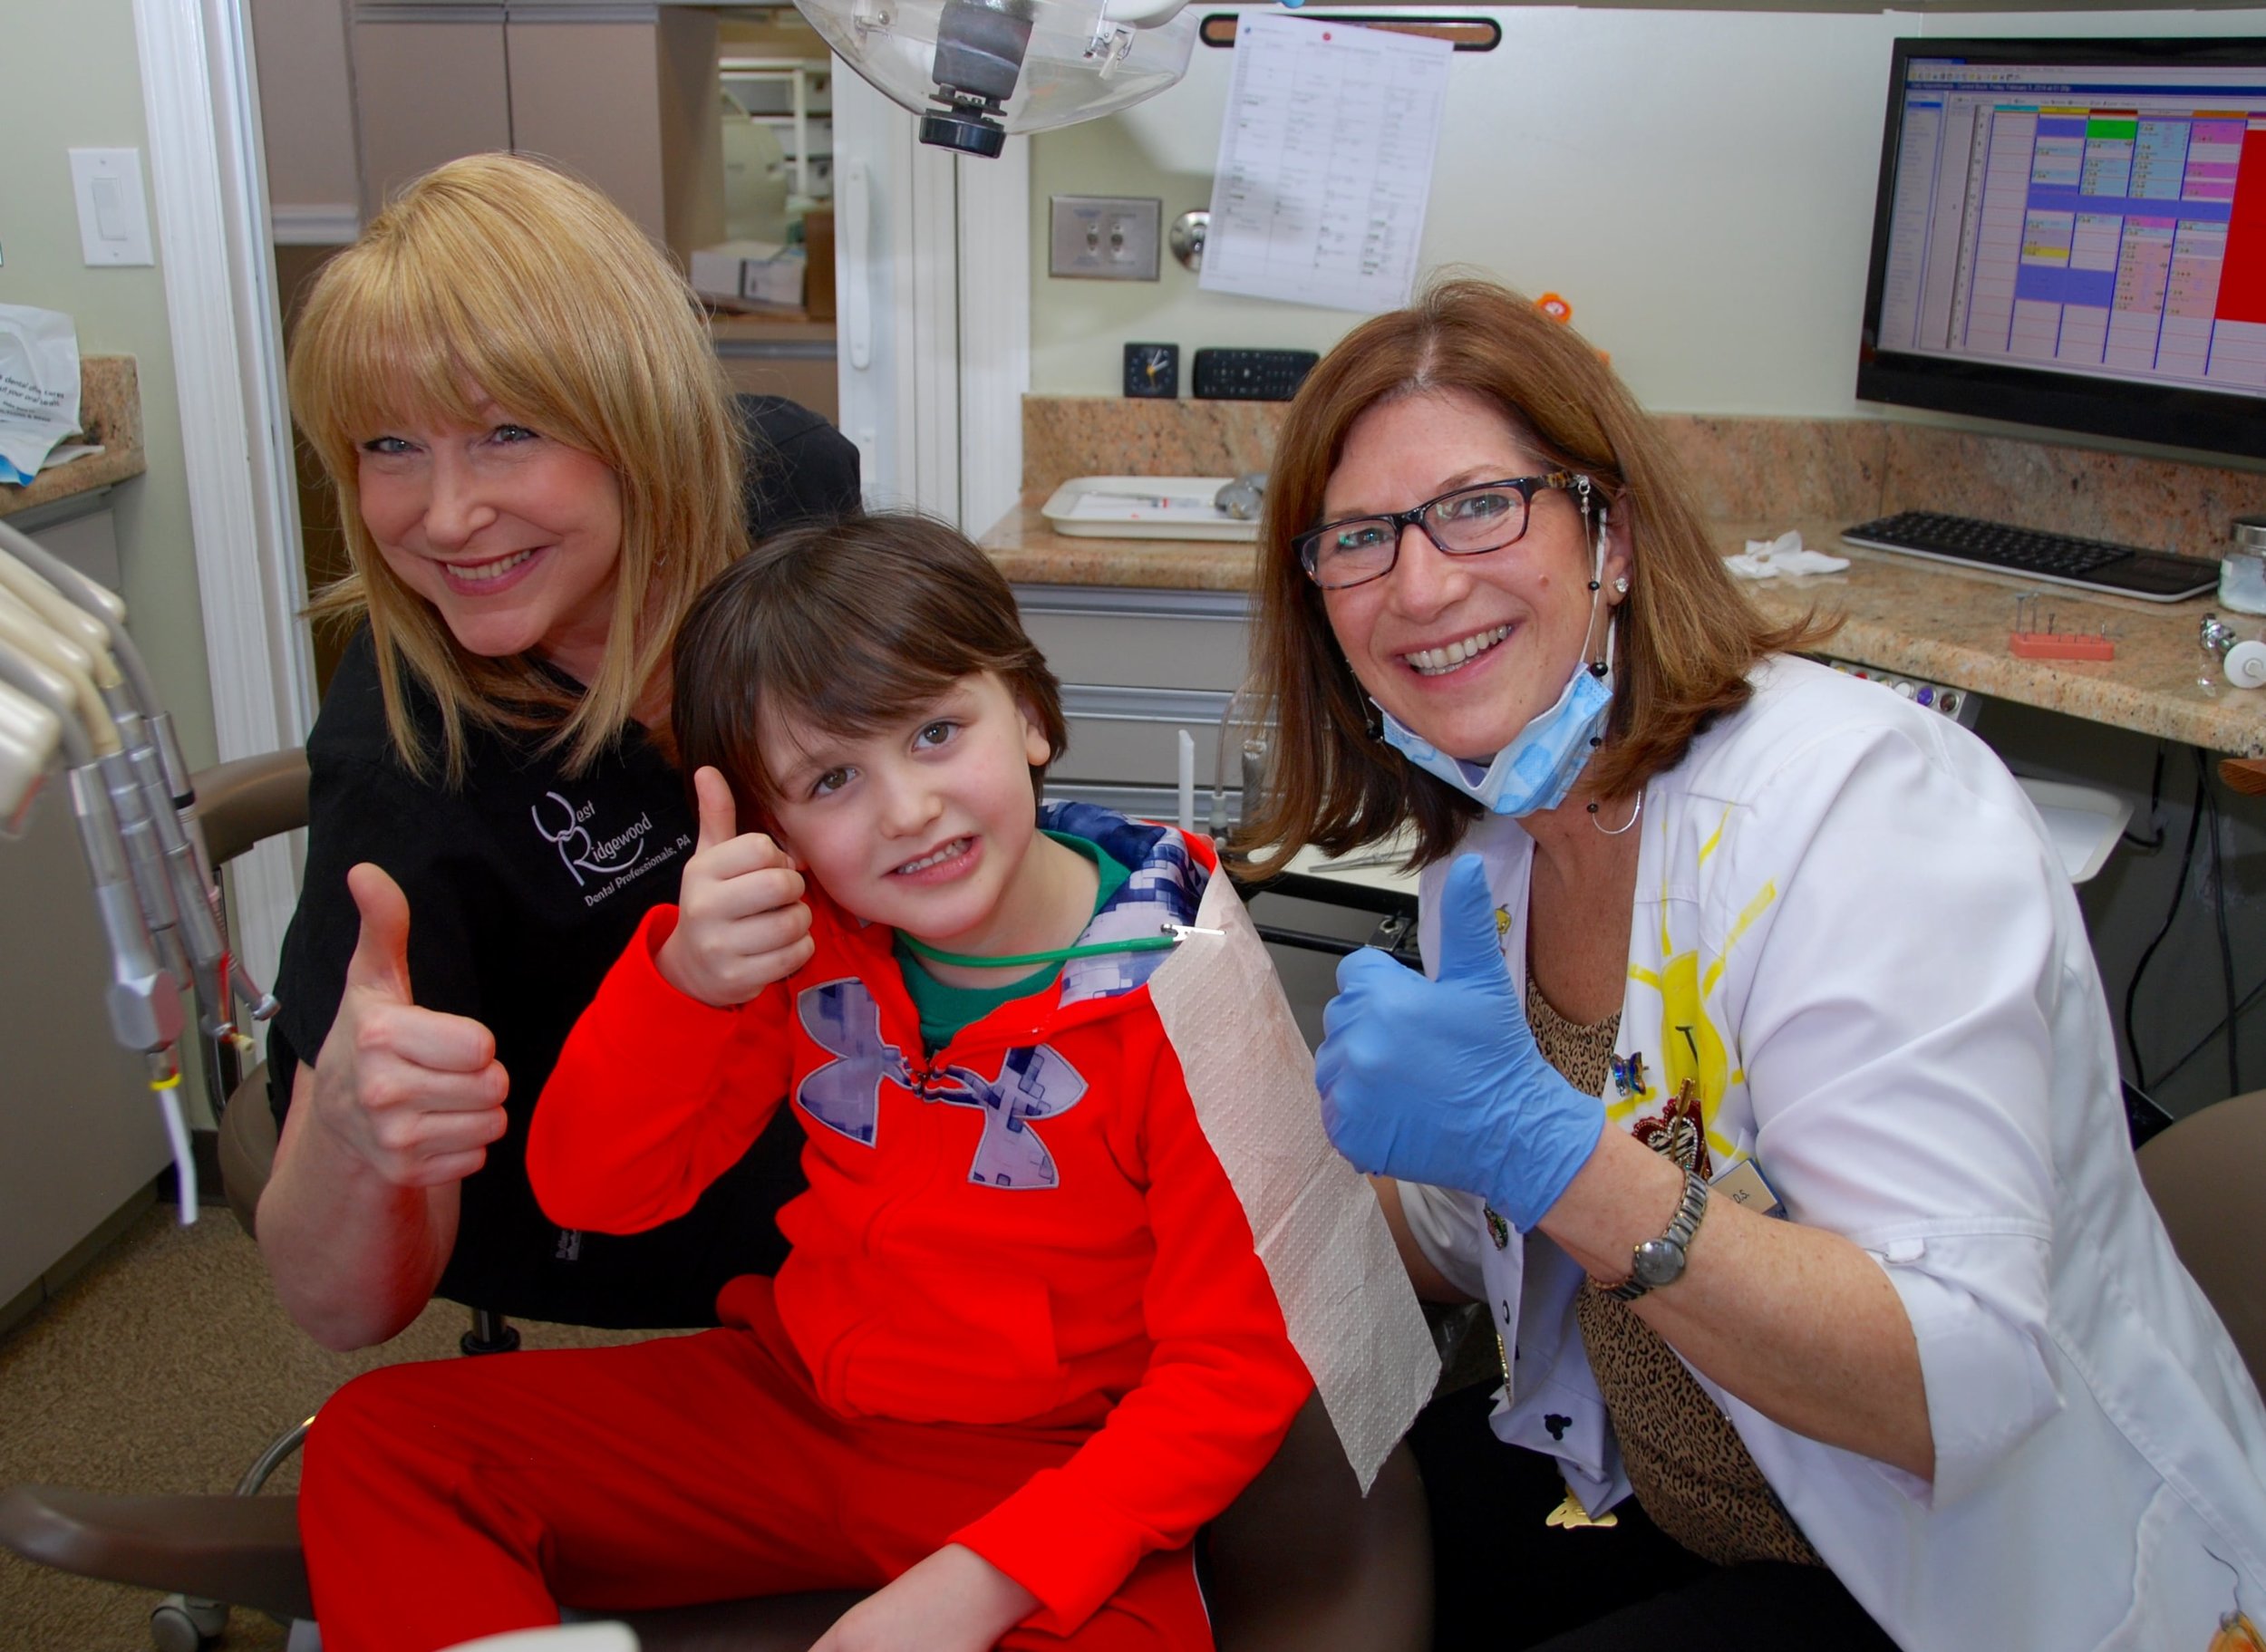 West Ridgewood Dental Professionals - Great Dentist for Kids in Bergen County